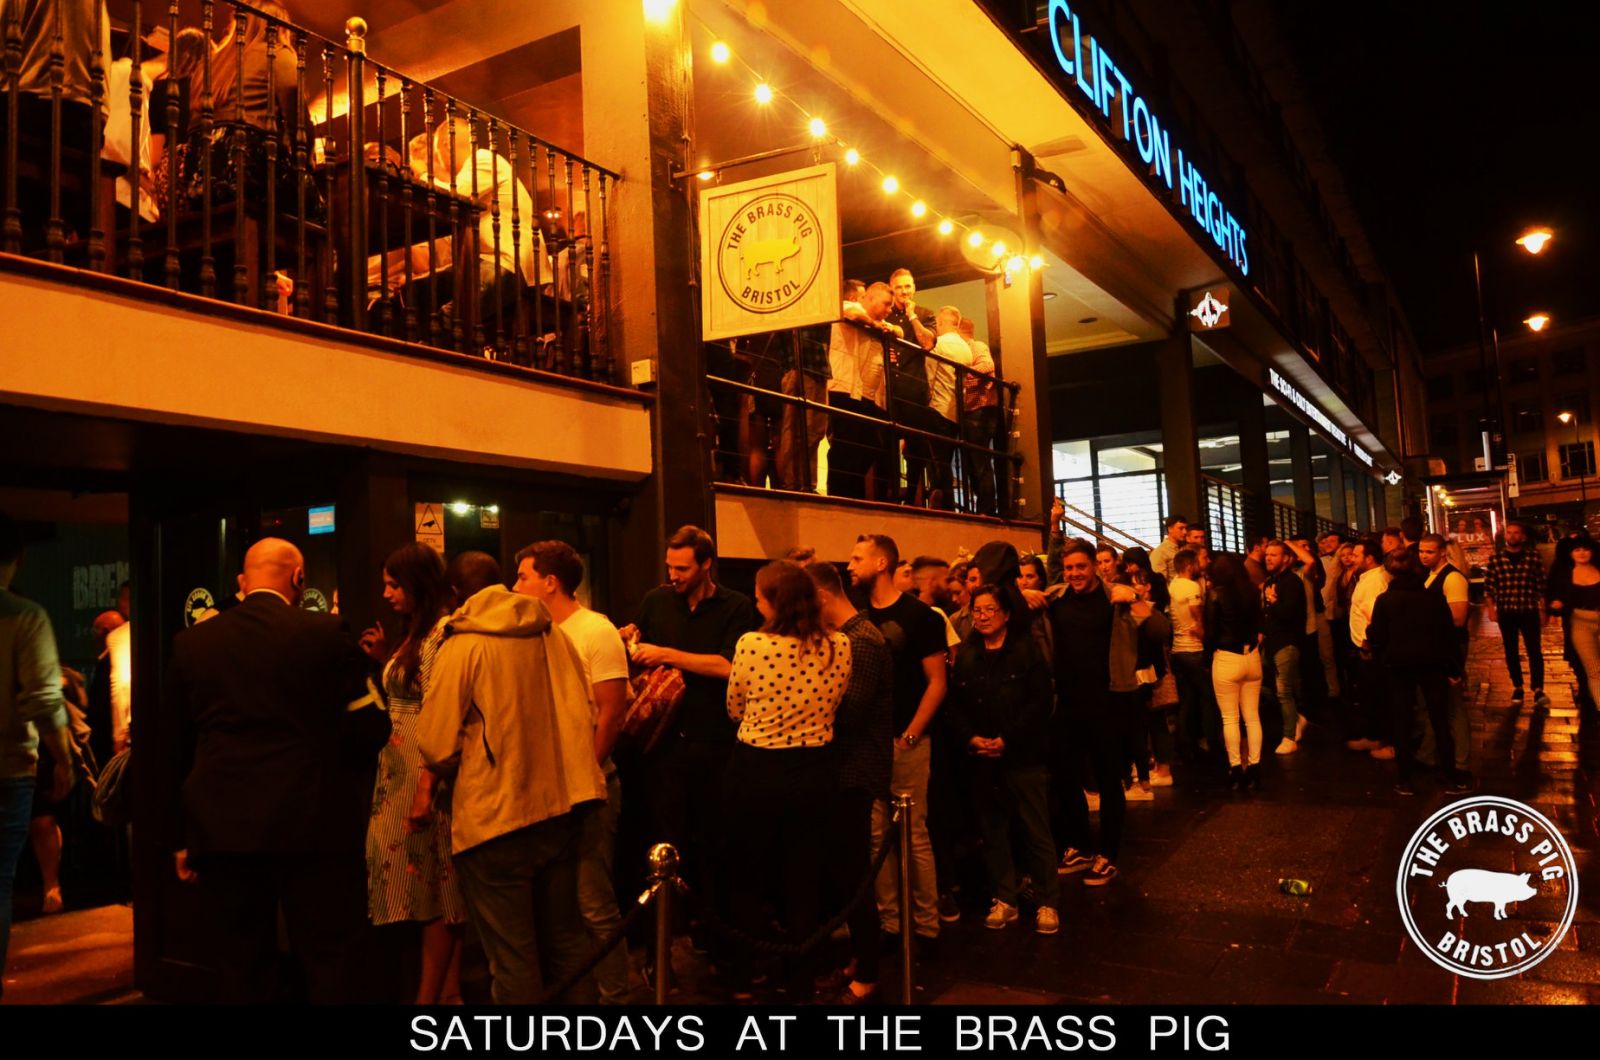 The Brass Pig in Bristol